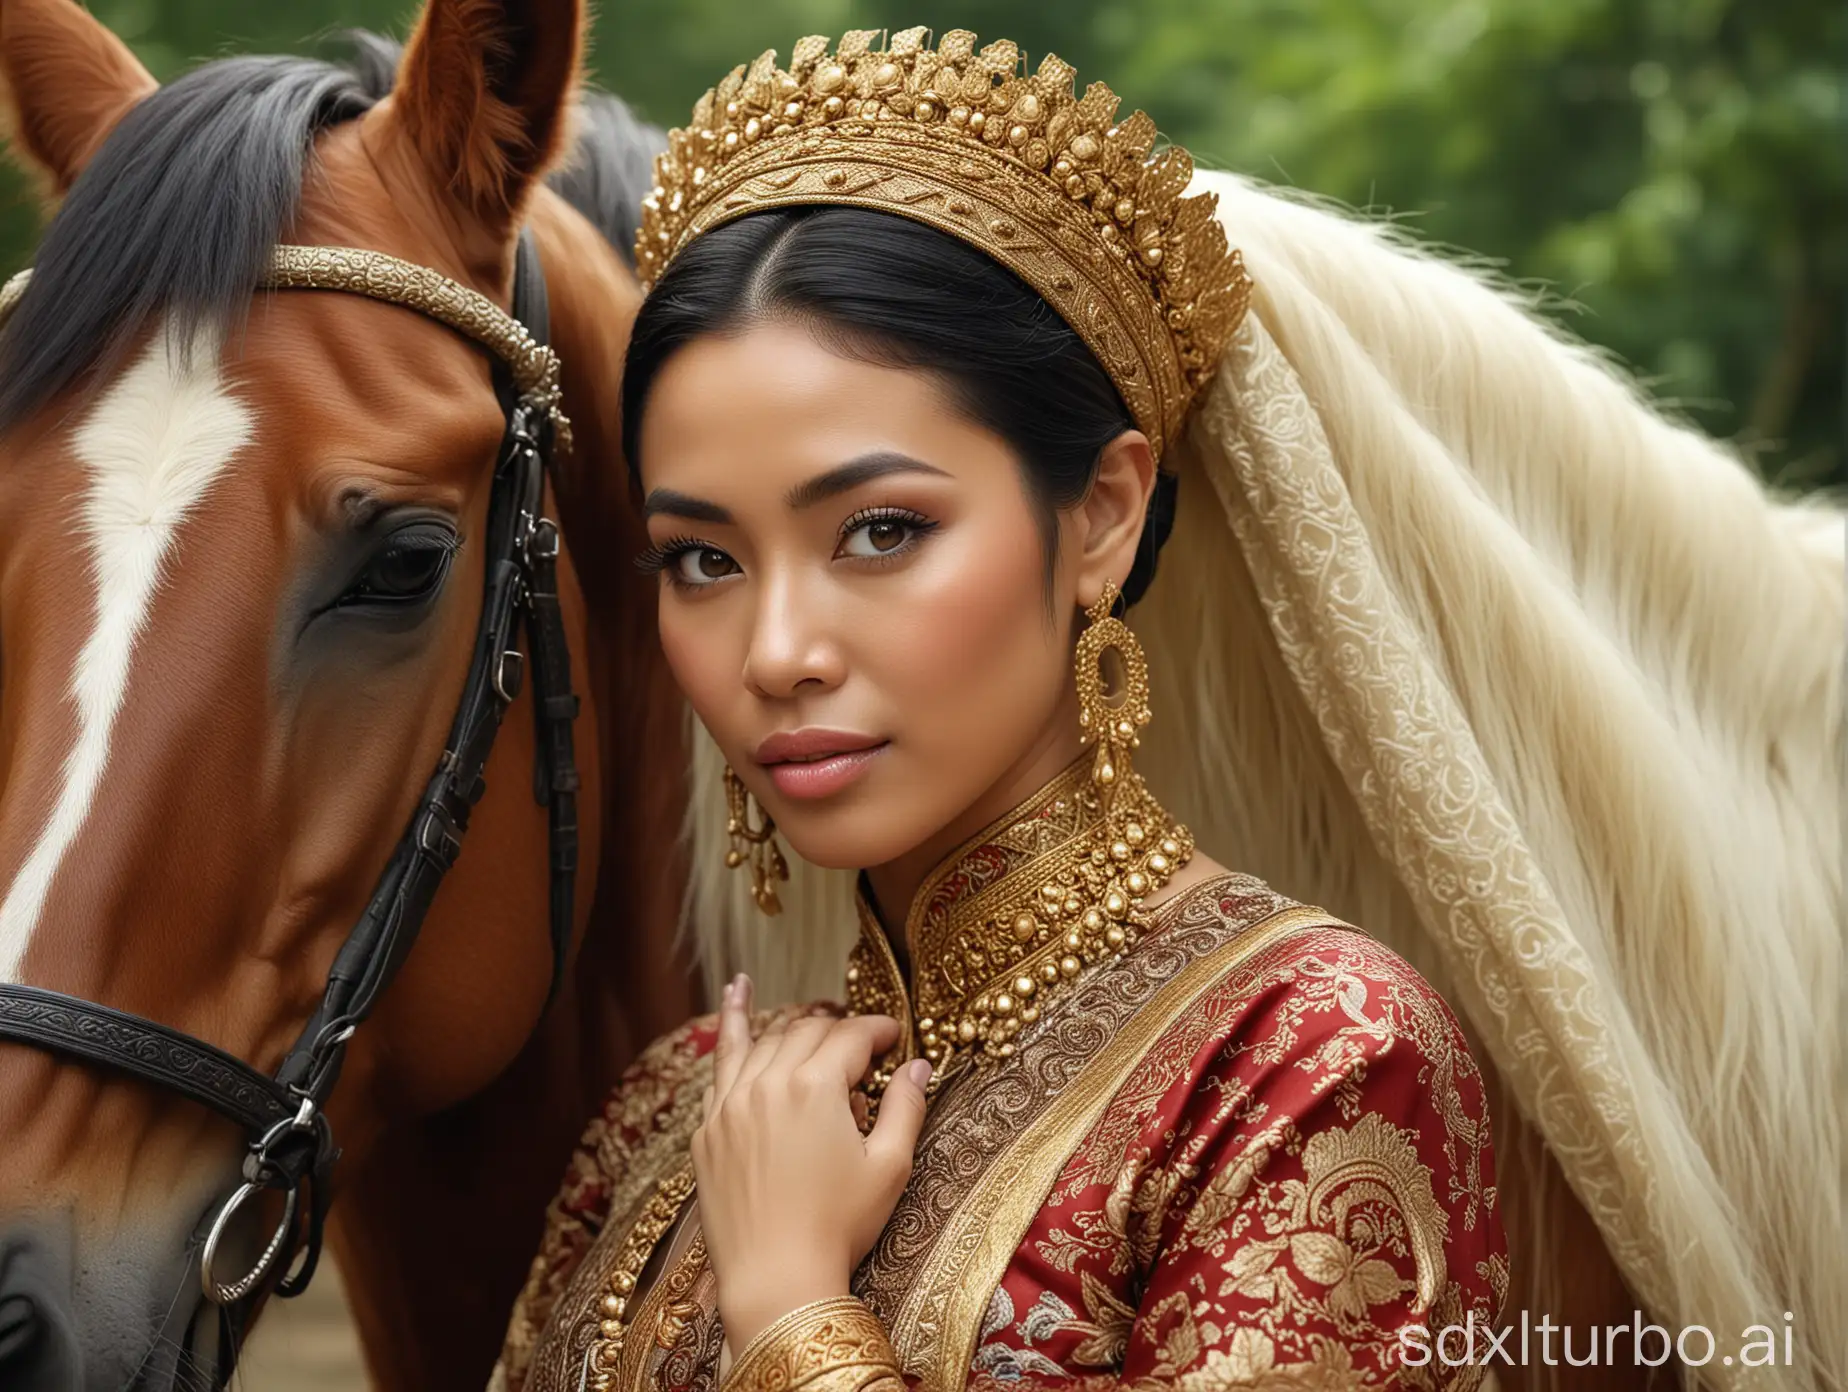 Foto hiperrealistis seorang wanita Jawa yang cantik mengenakan kemben dan khaki tradisional dari Jawa kuno . Sedang mencintai sebuah kuda . Fotonya sangat terang dan terlihat sangat realistis. Shoot Sony camera , close up